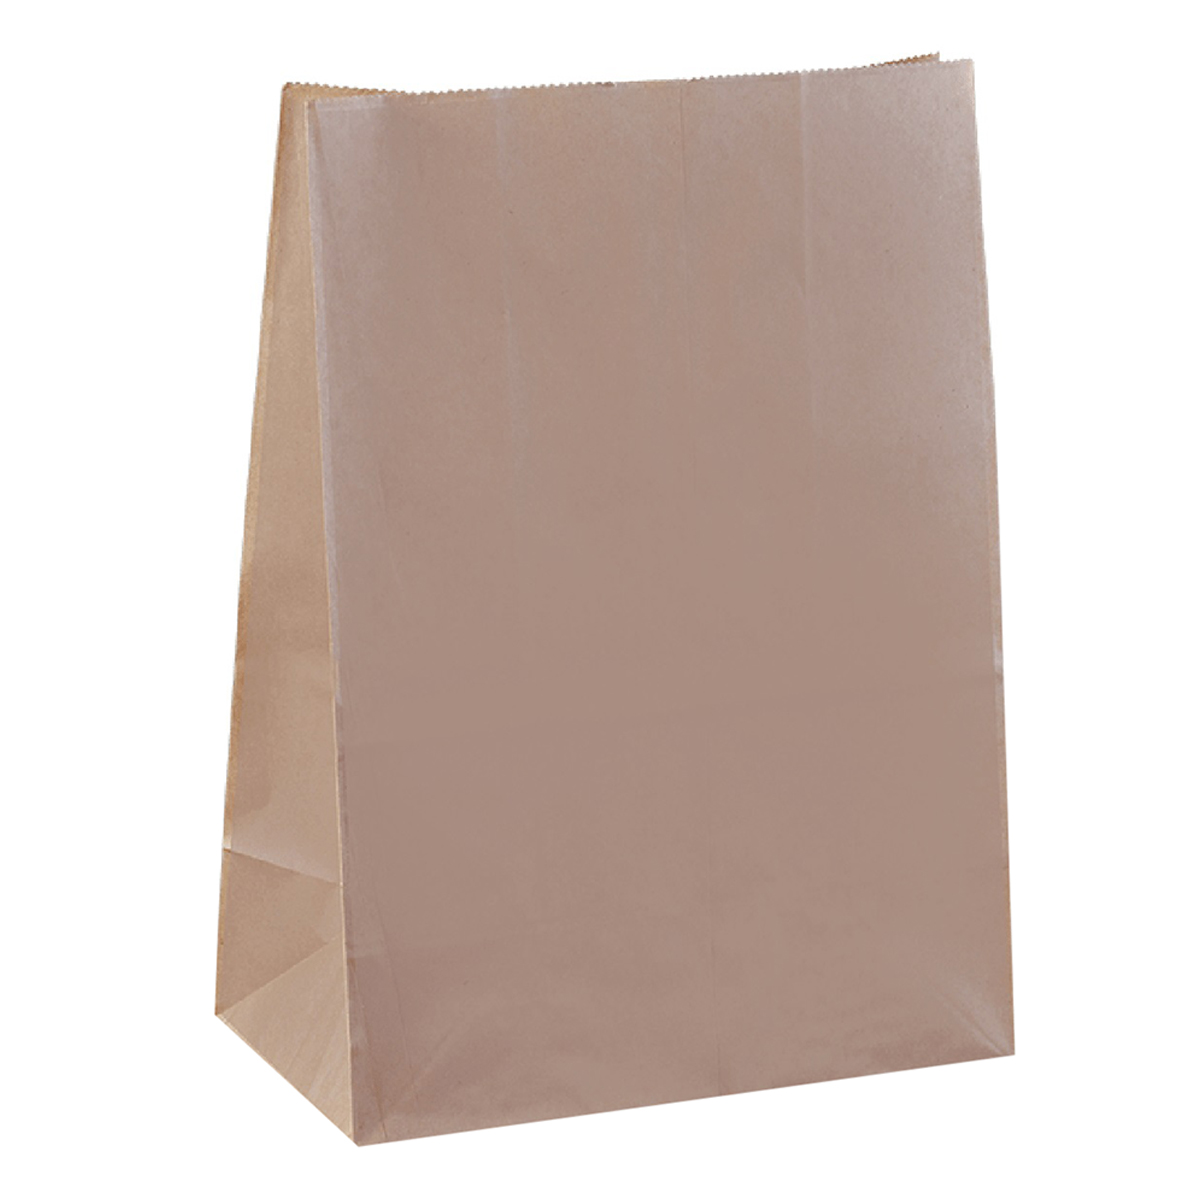 Paper Takeaway Carriers, SOS White Takeaway Bags